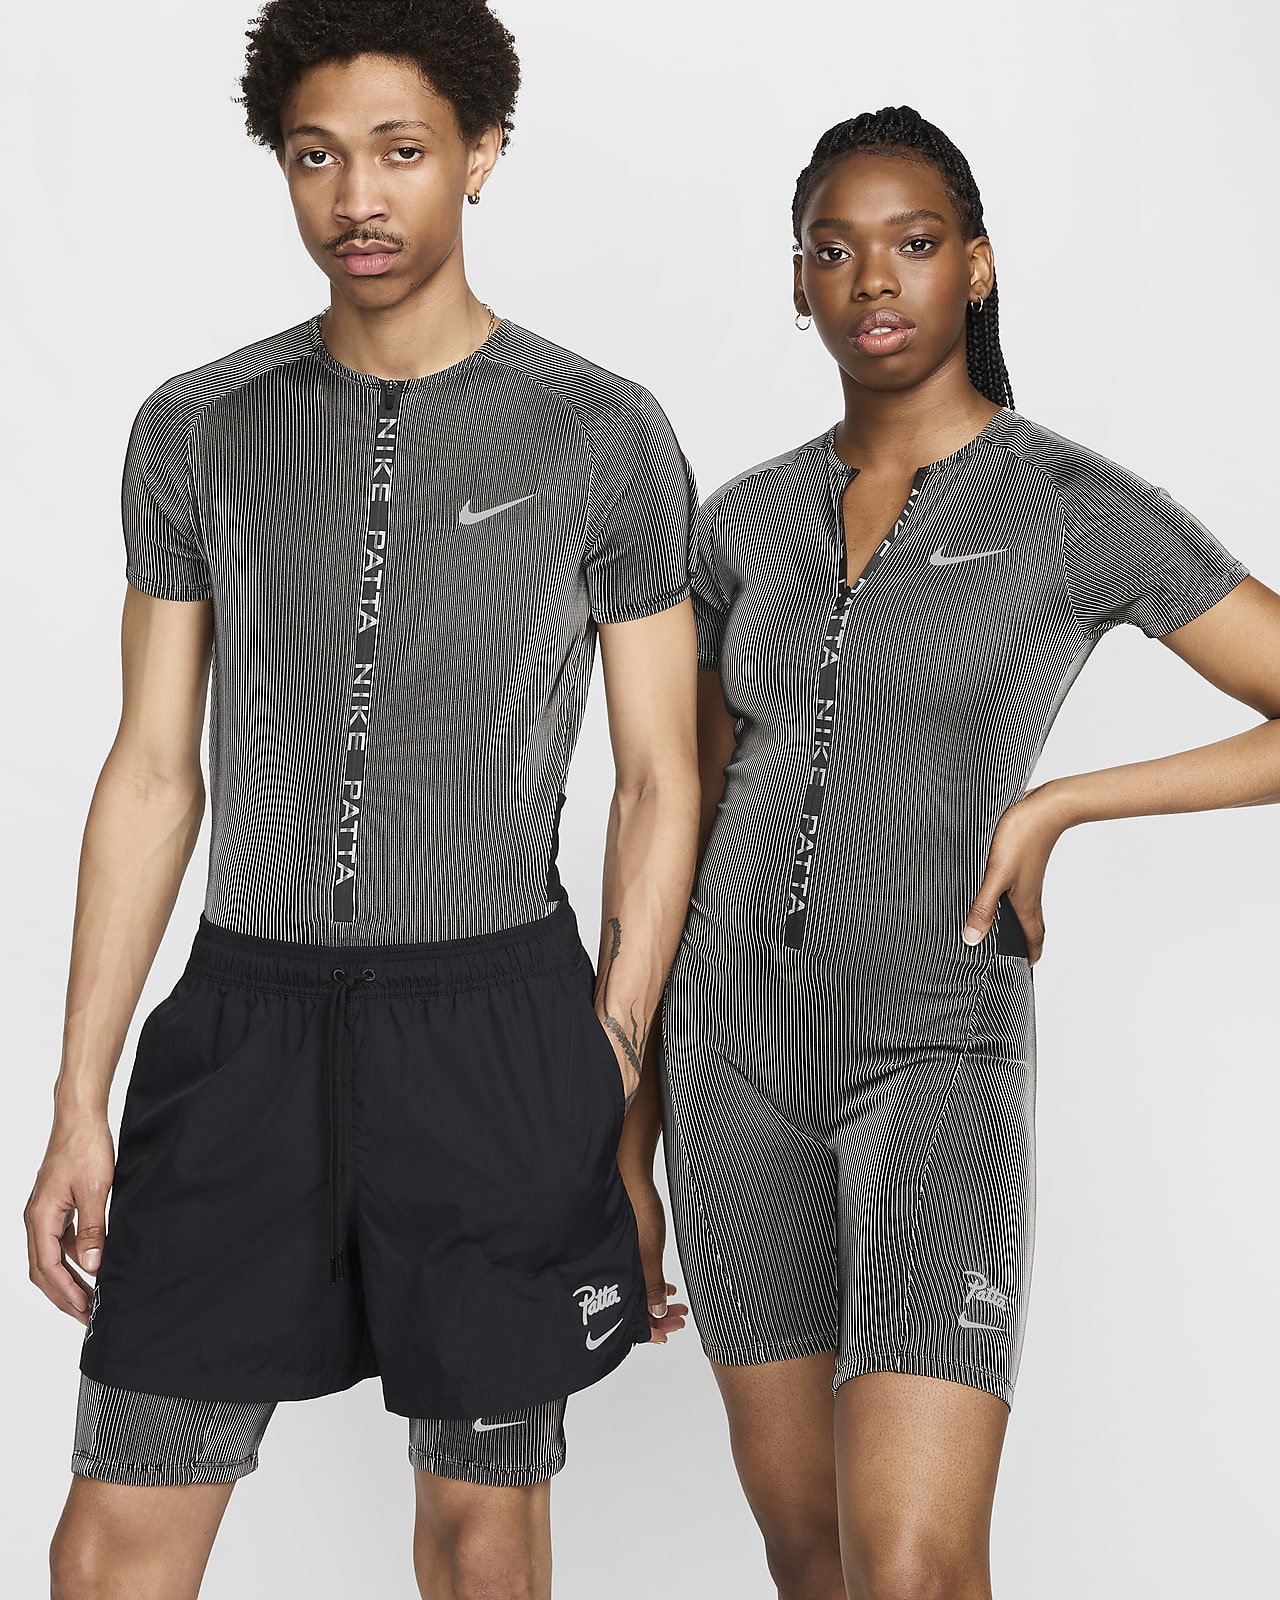 Nike x Patta Running Team Racing Suit